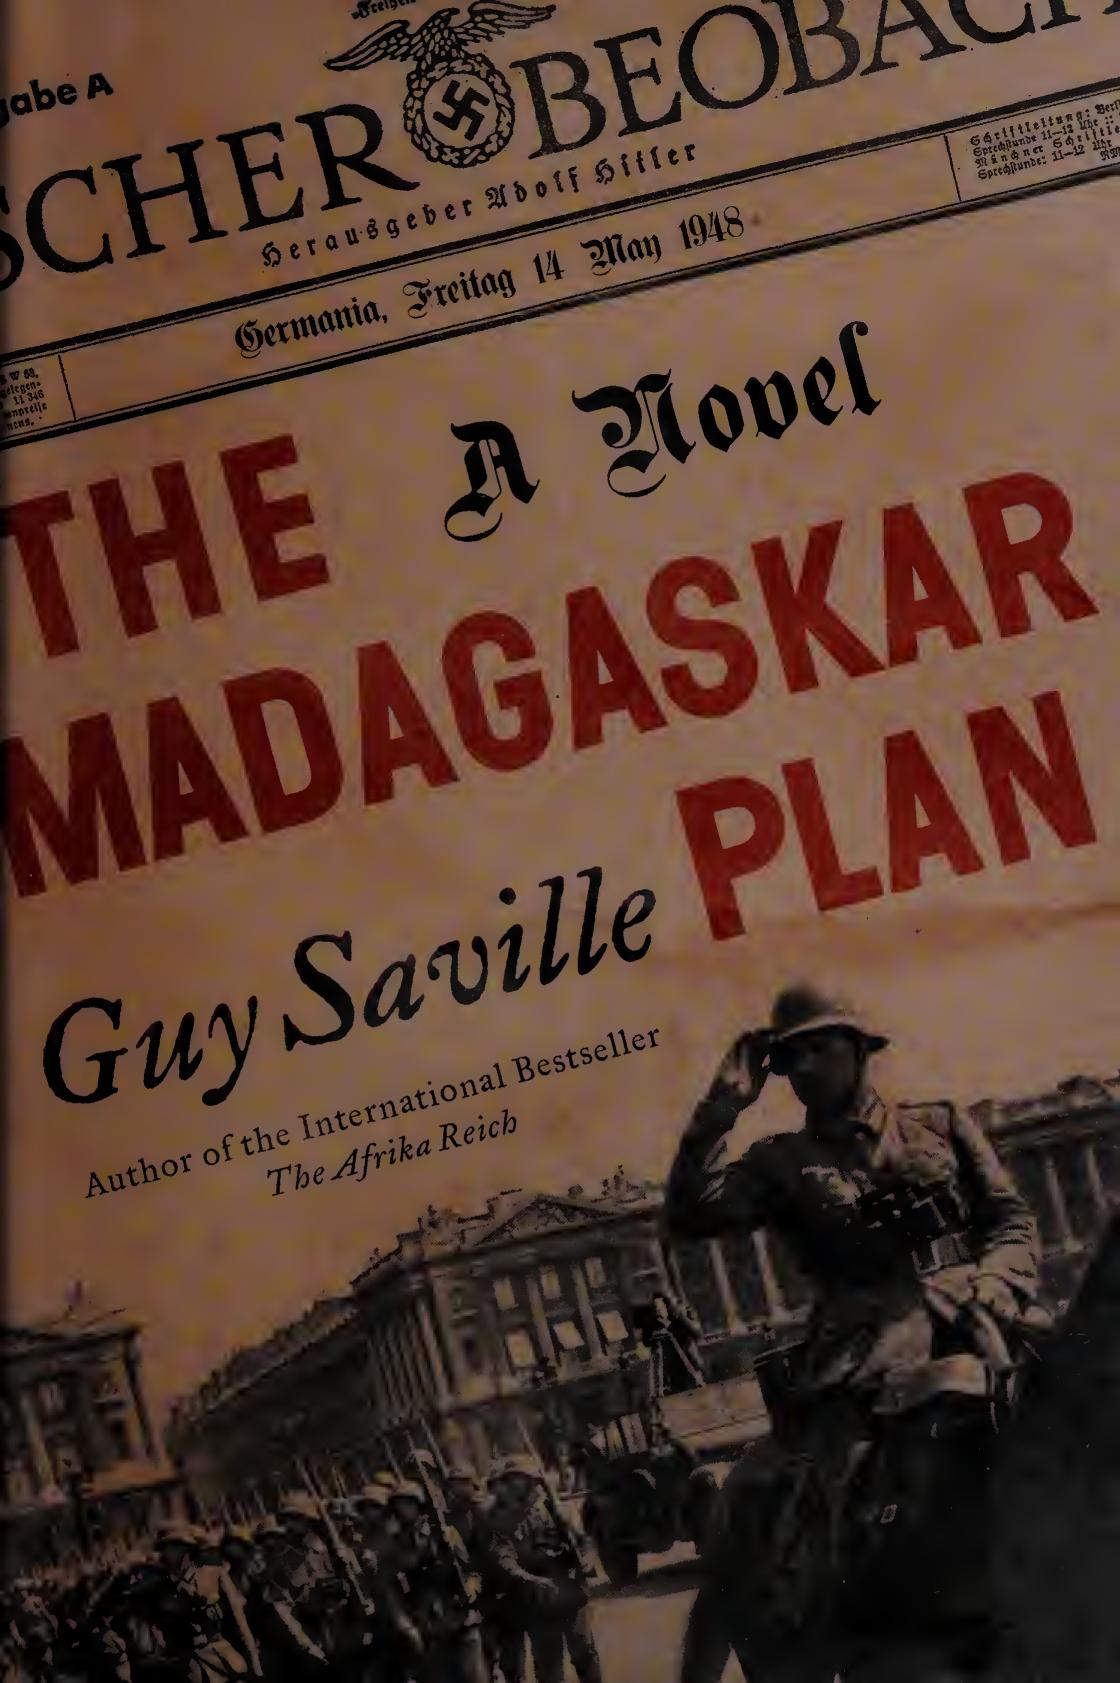 The Madagaskar Plan